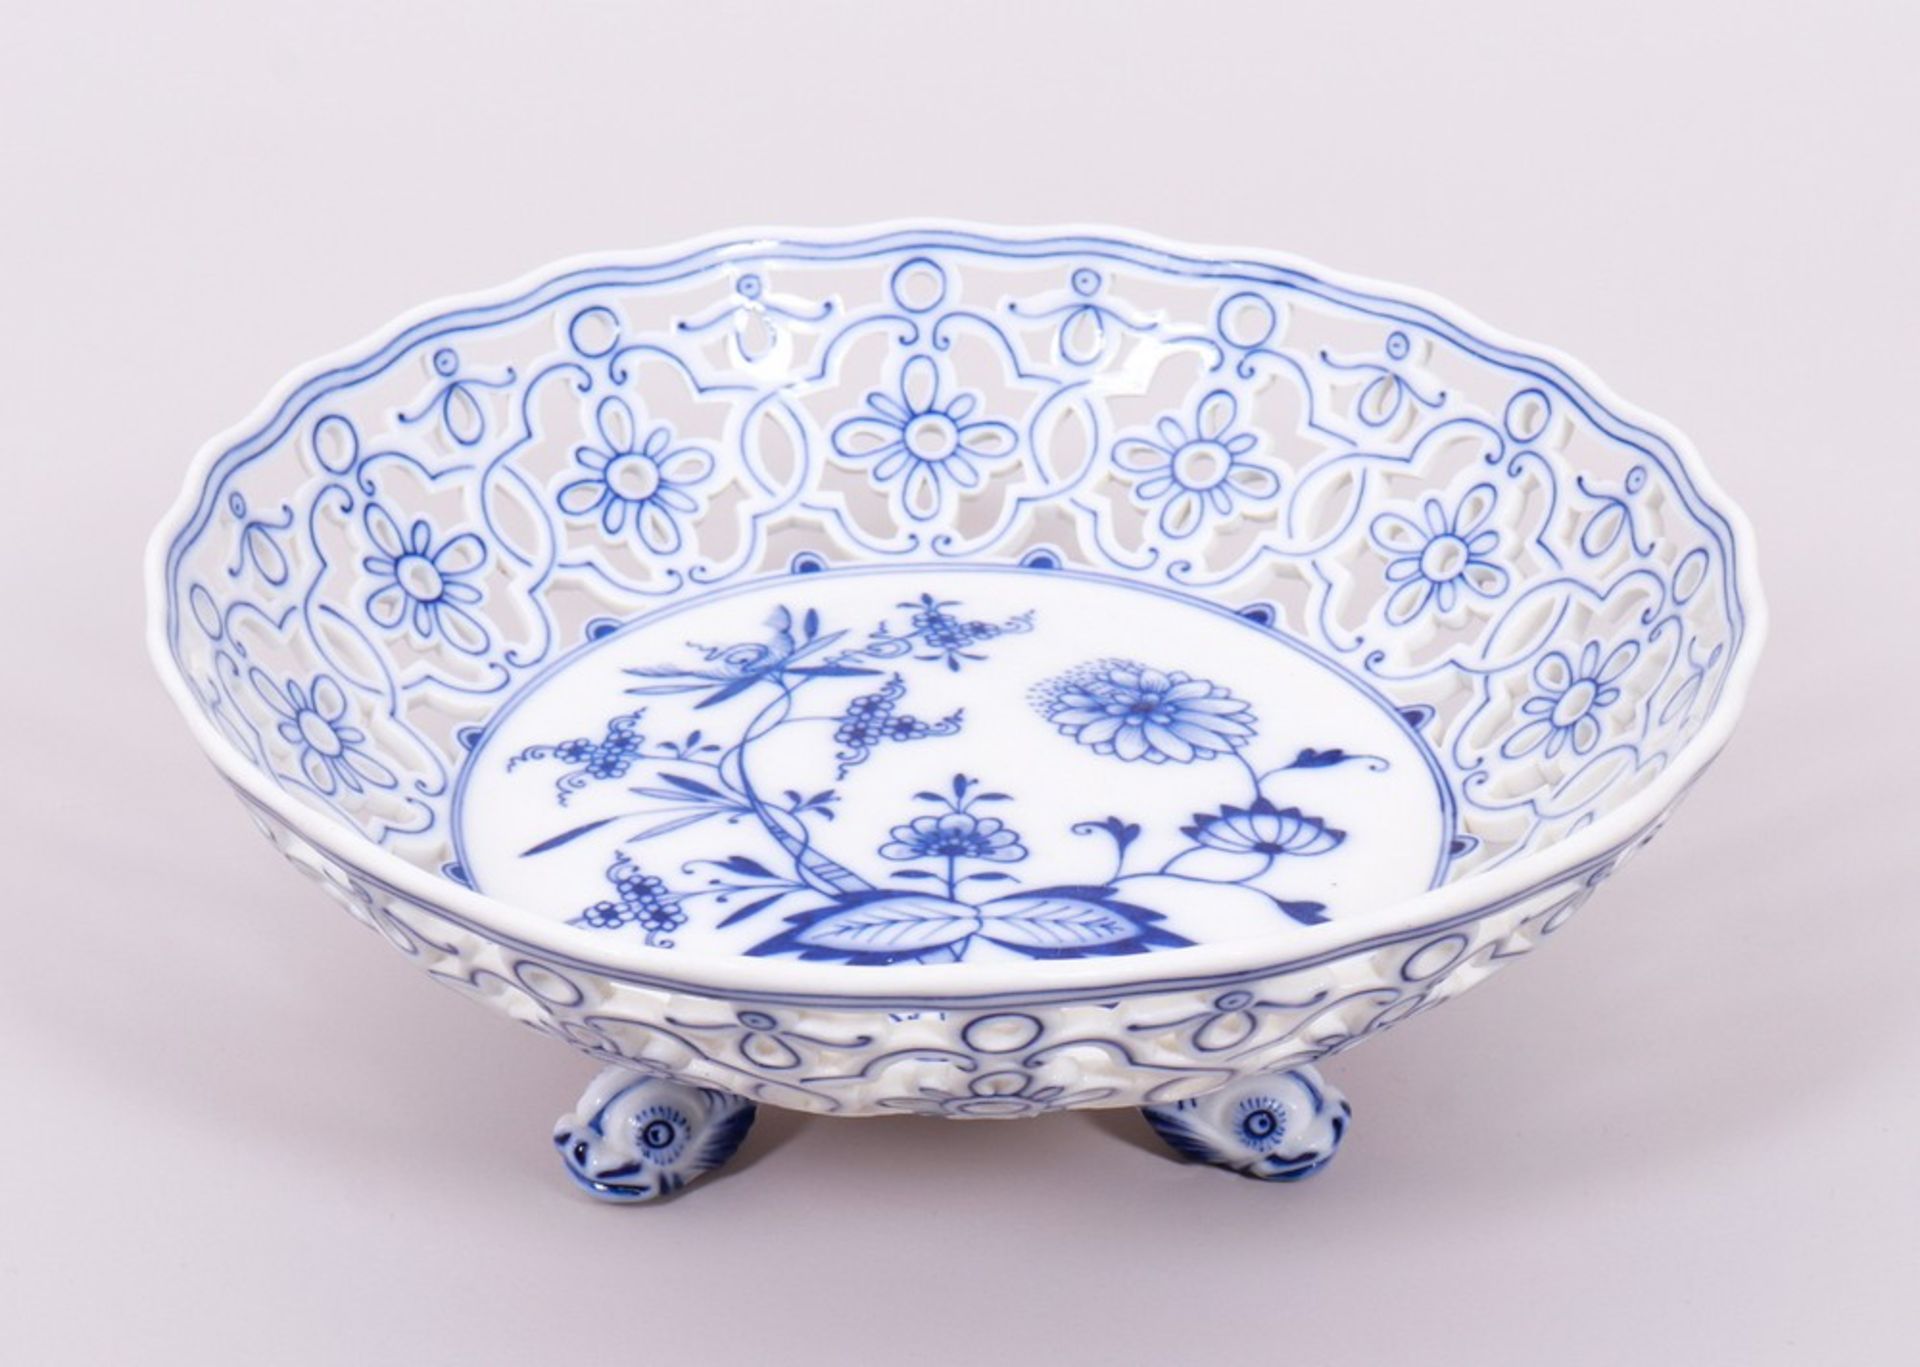 Foot bowl, Meissen, “onion pattern” decor, c. 1900